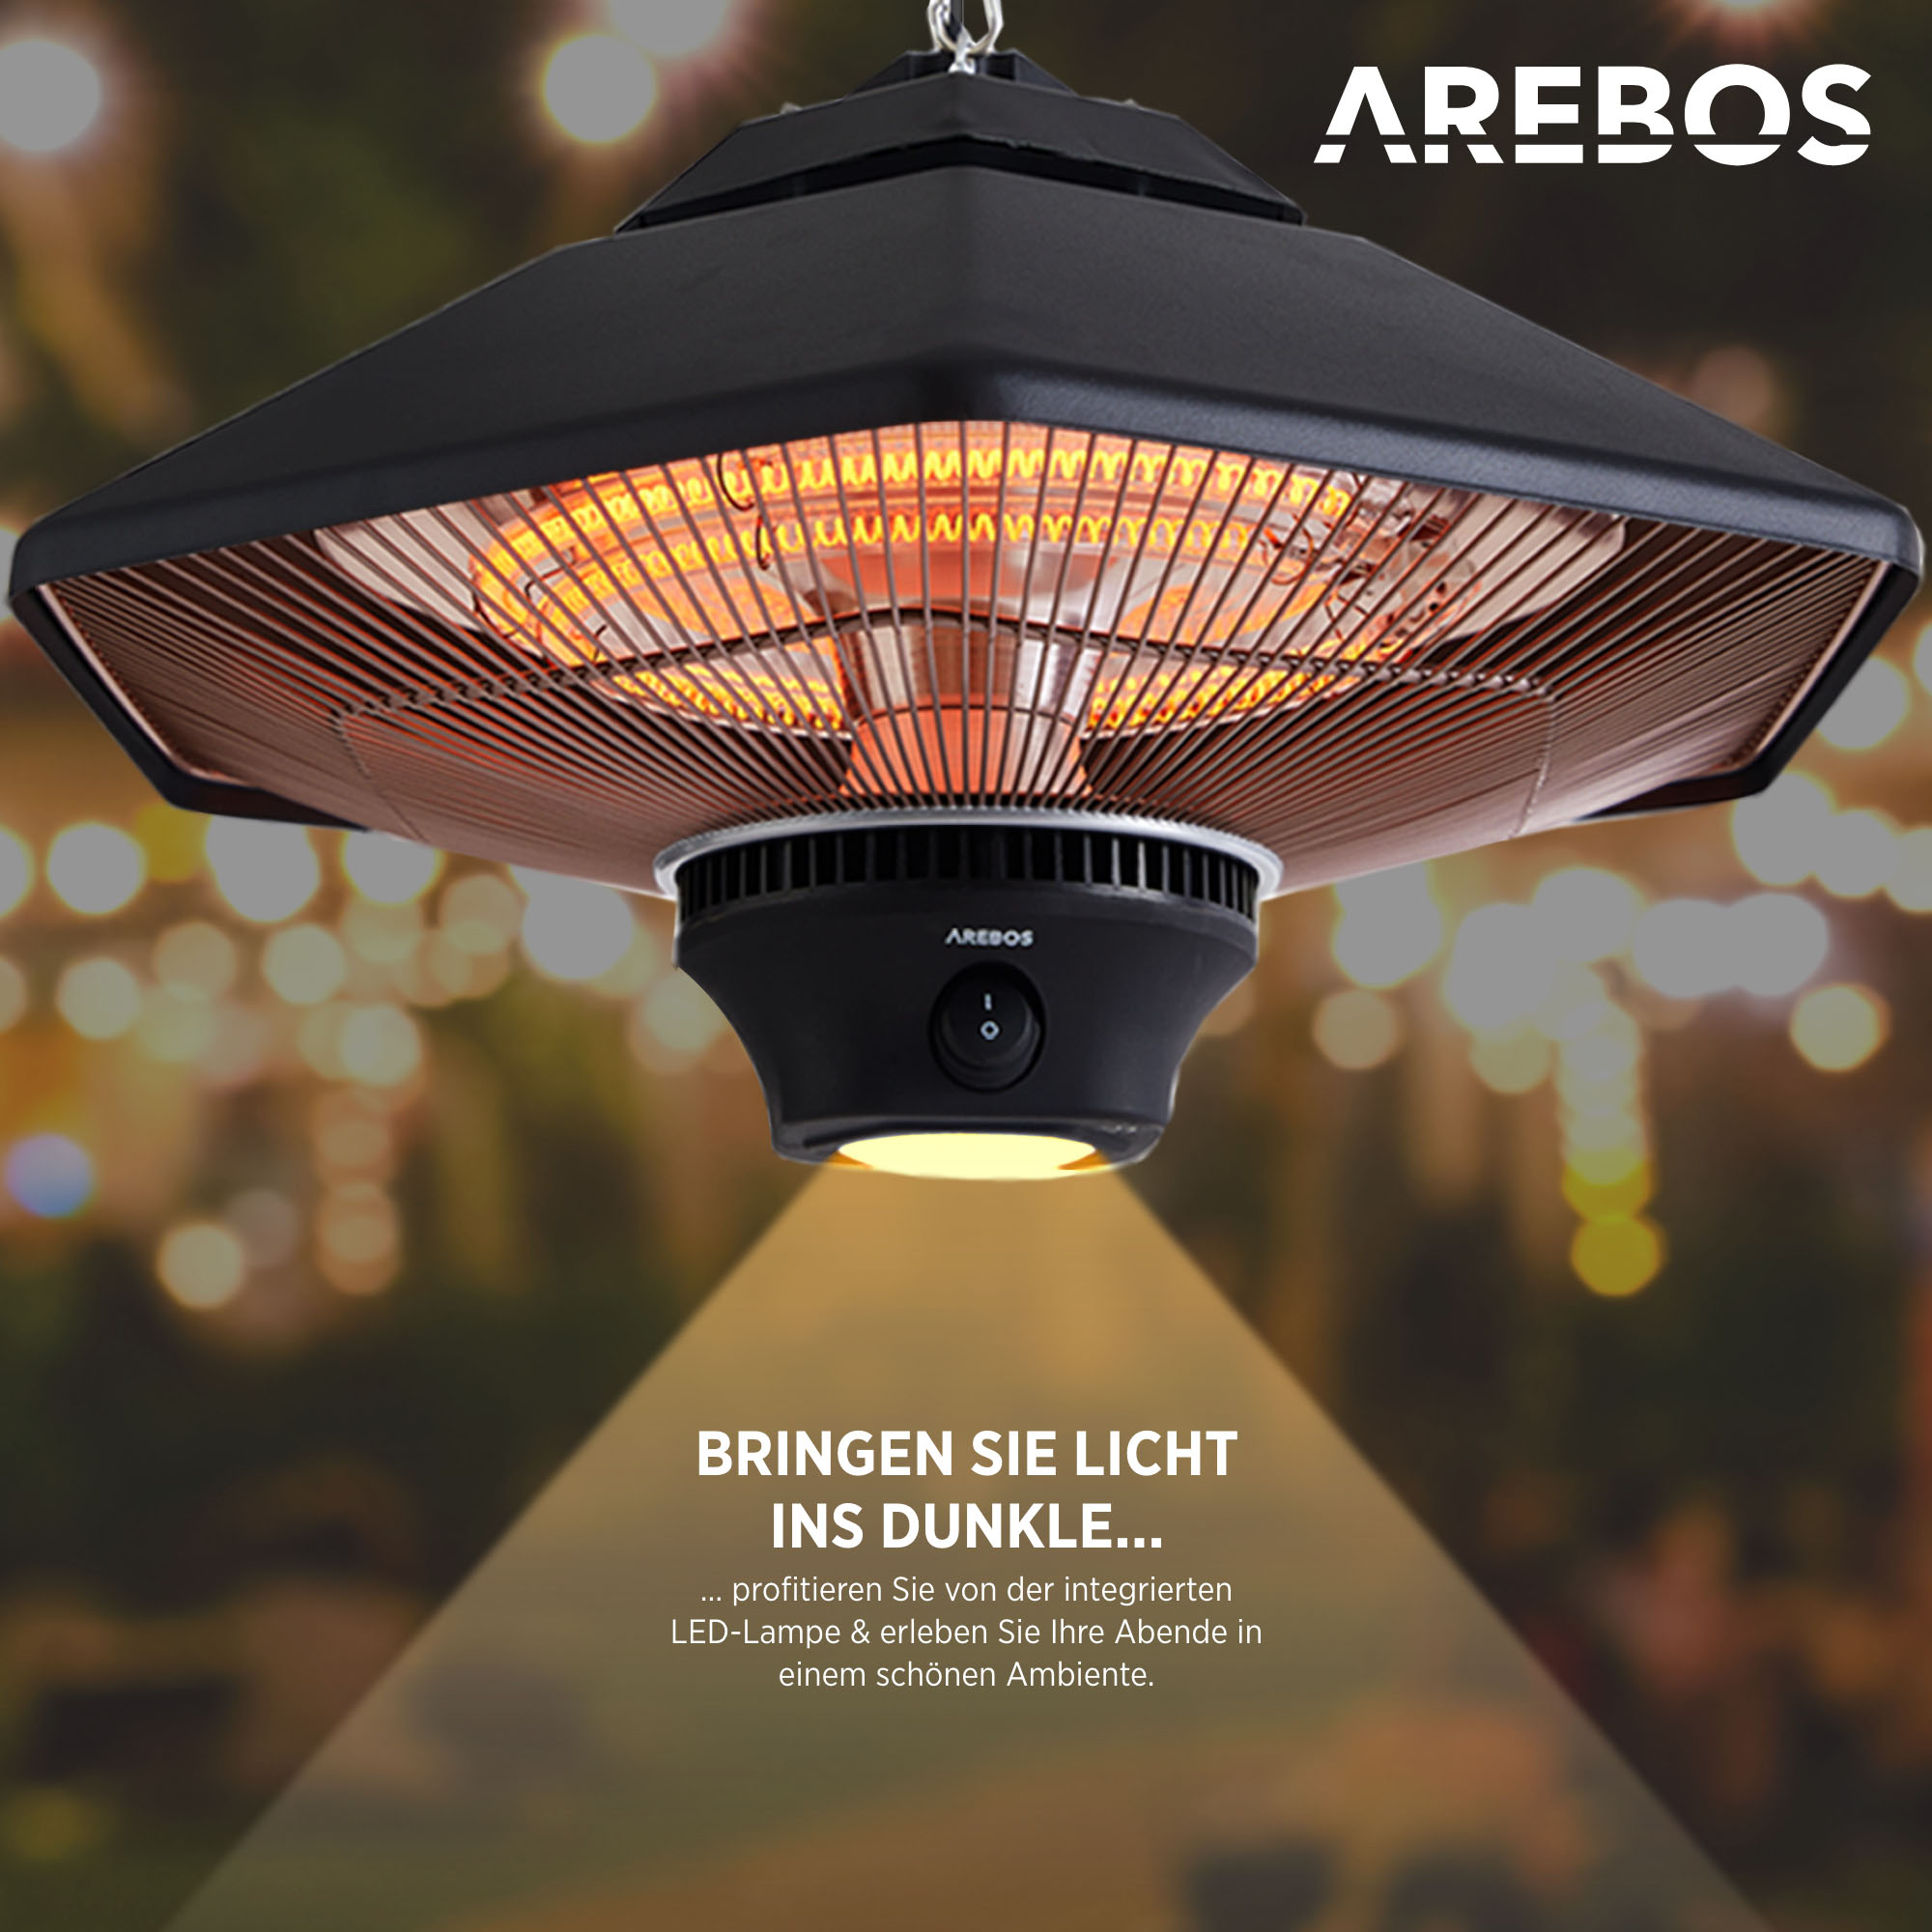 AREBOS Fernbedienung | hexagonal + LED-Lampe (2000 Deckenheizstrahler Watt) Hexa